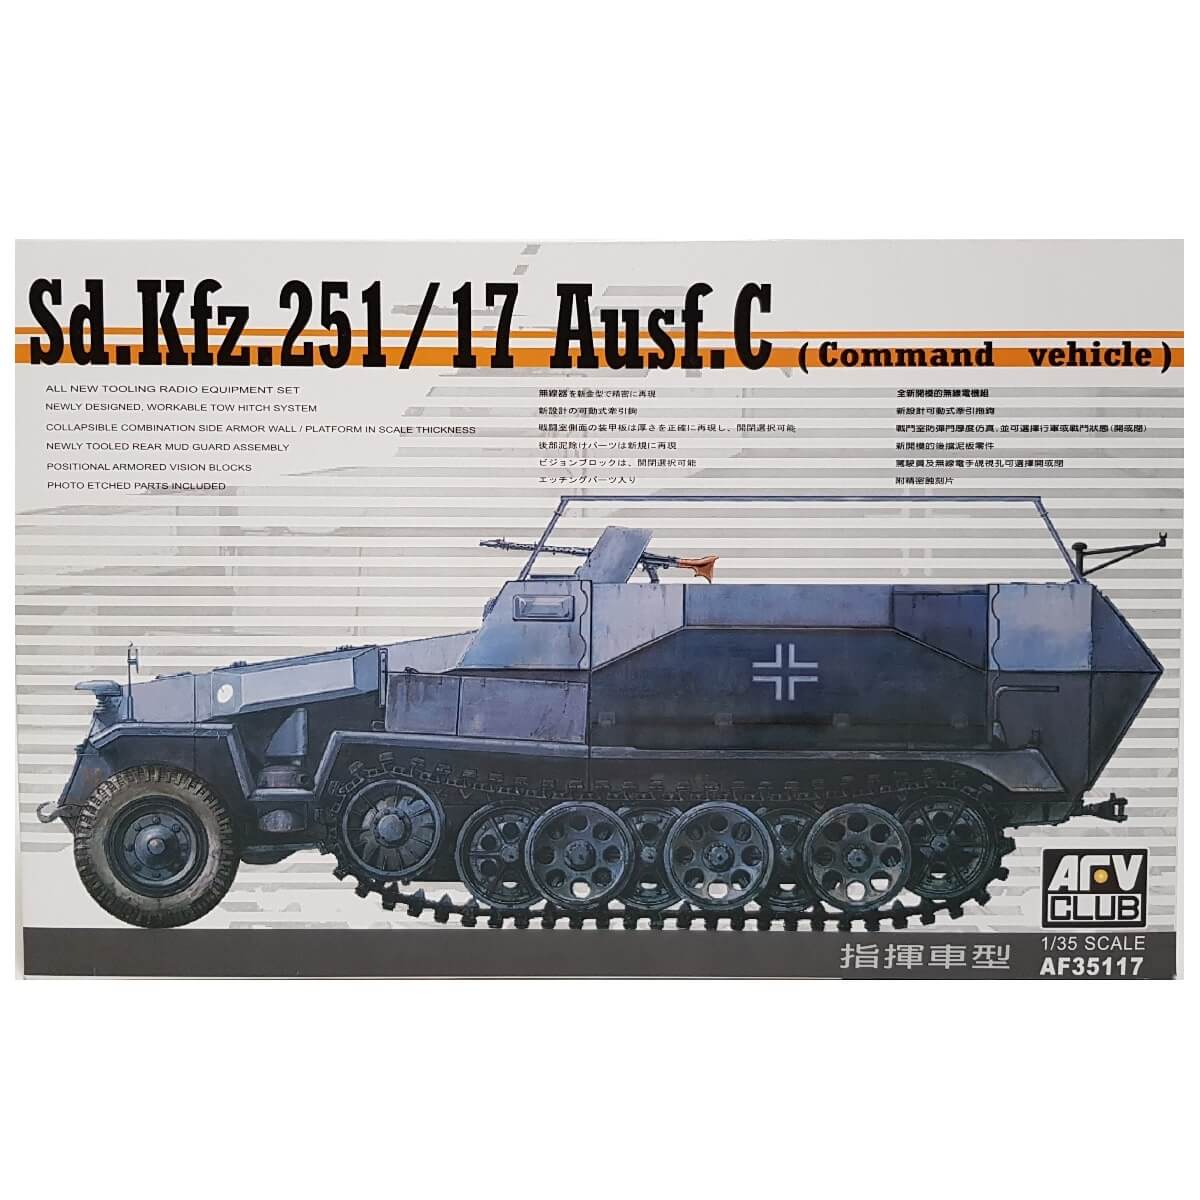 1:35 Sd.Kfz. 251/17 Ausf. C Command vehicle - AFV CLUB